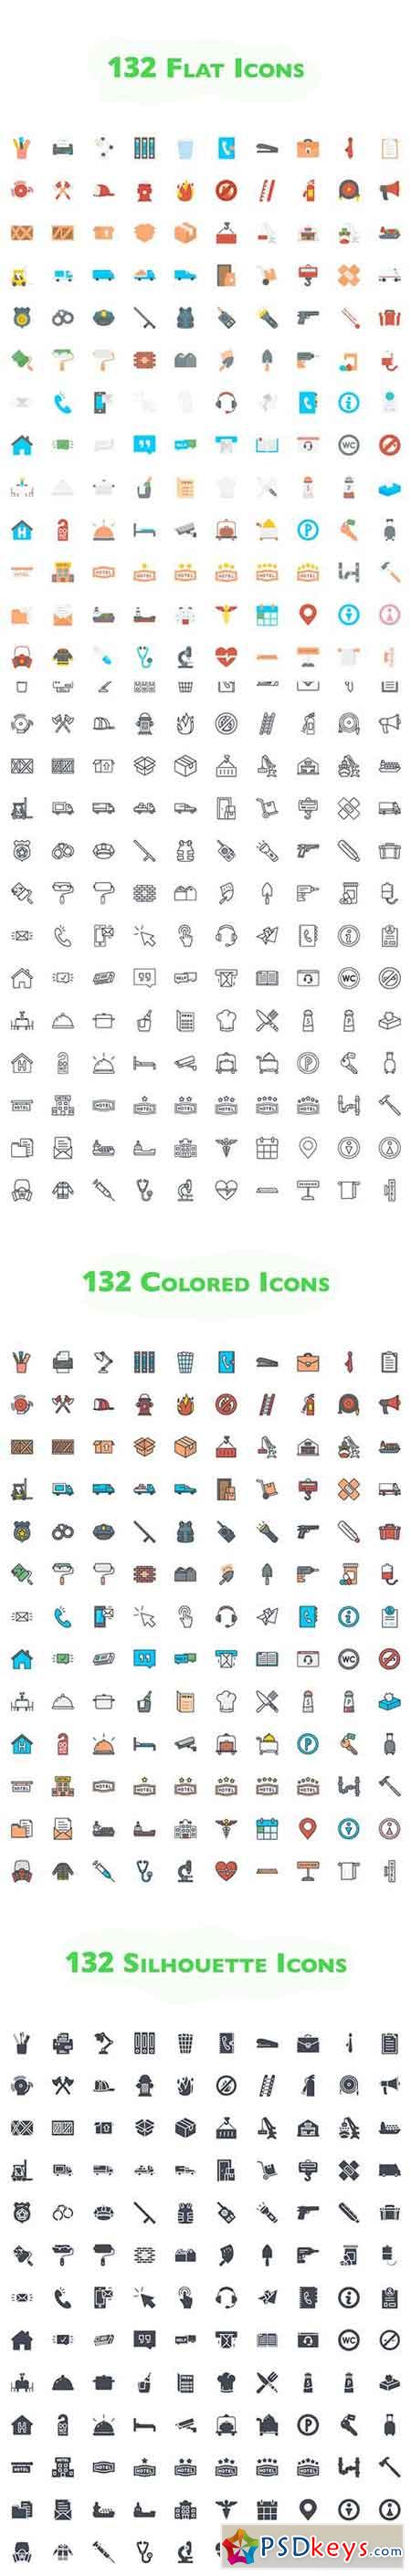 528 Service Icons